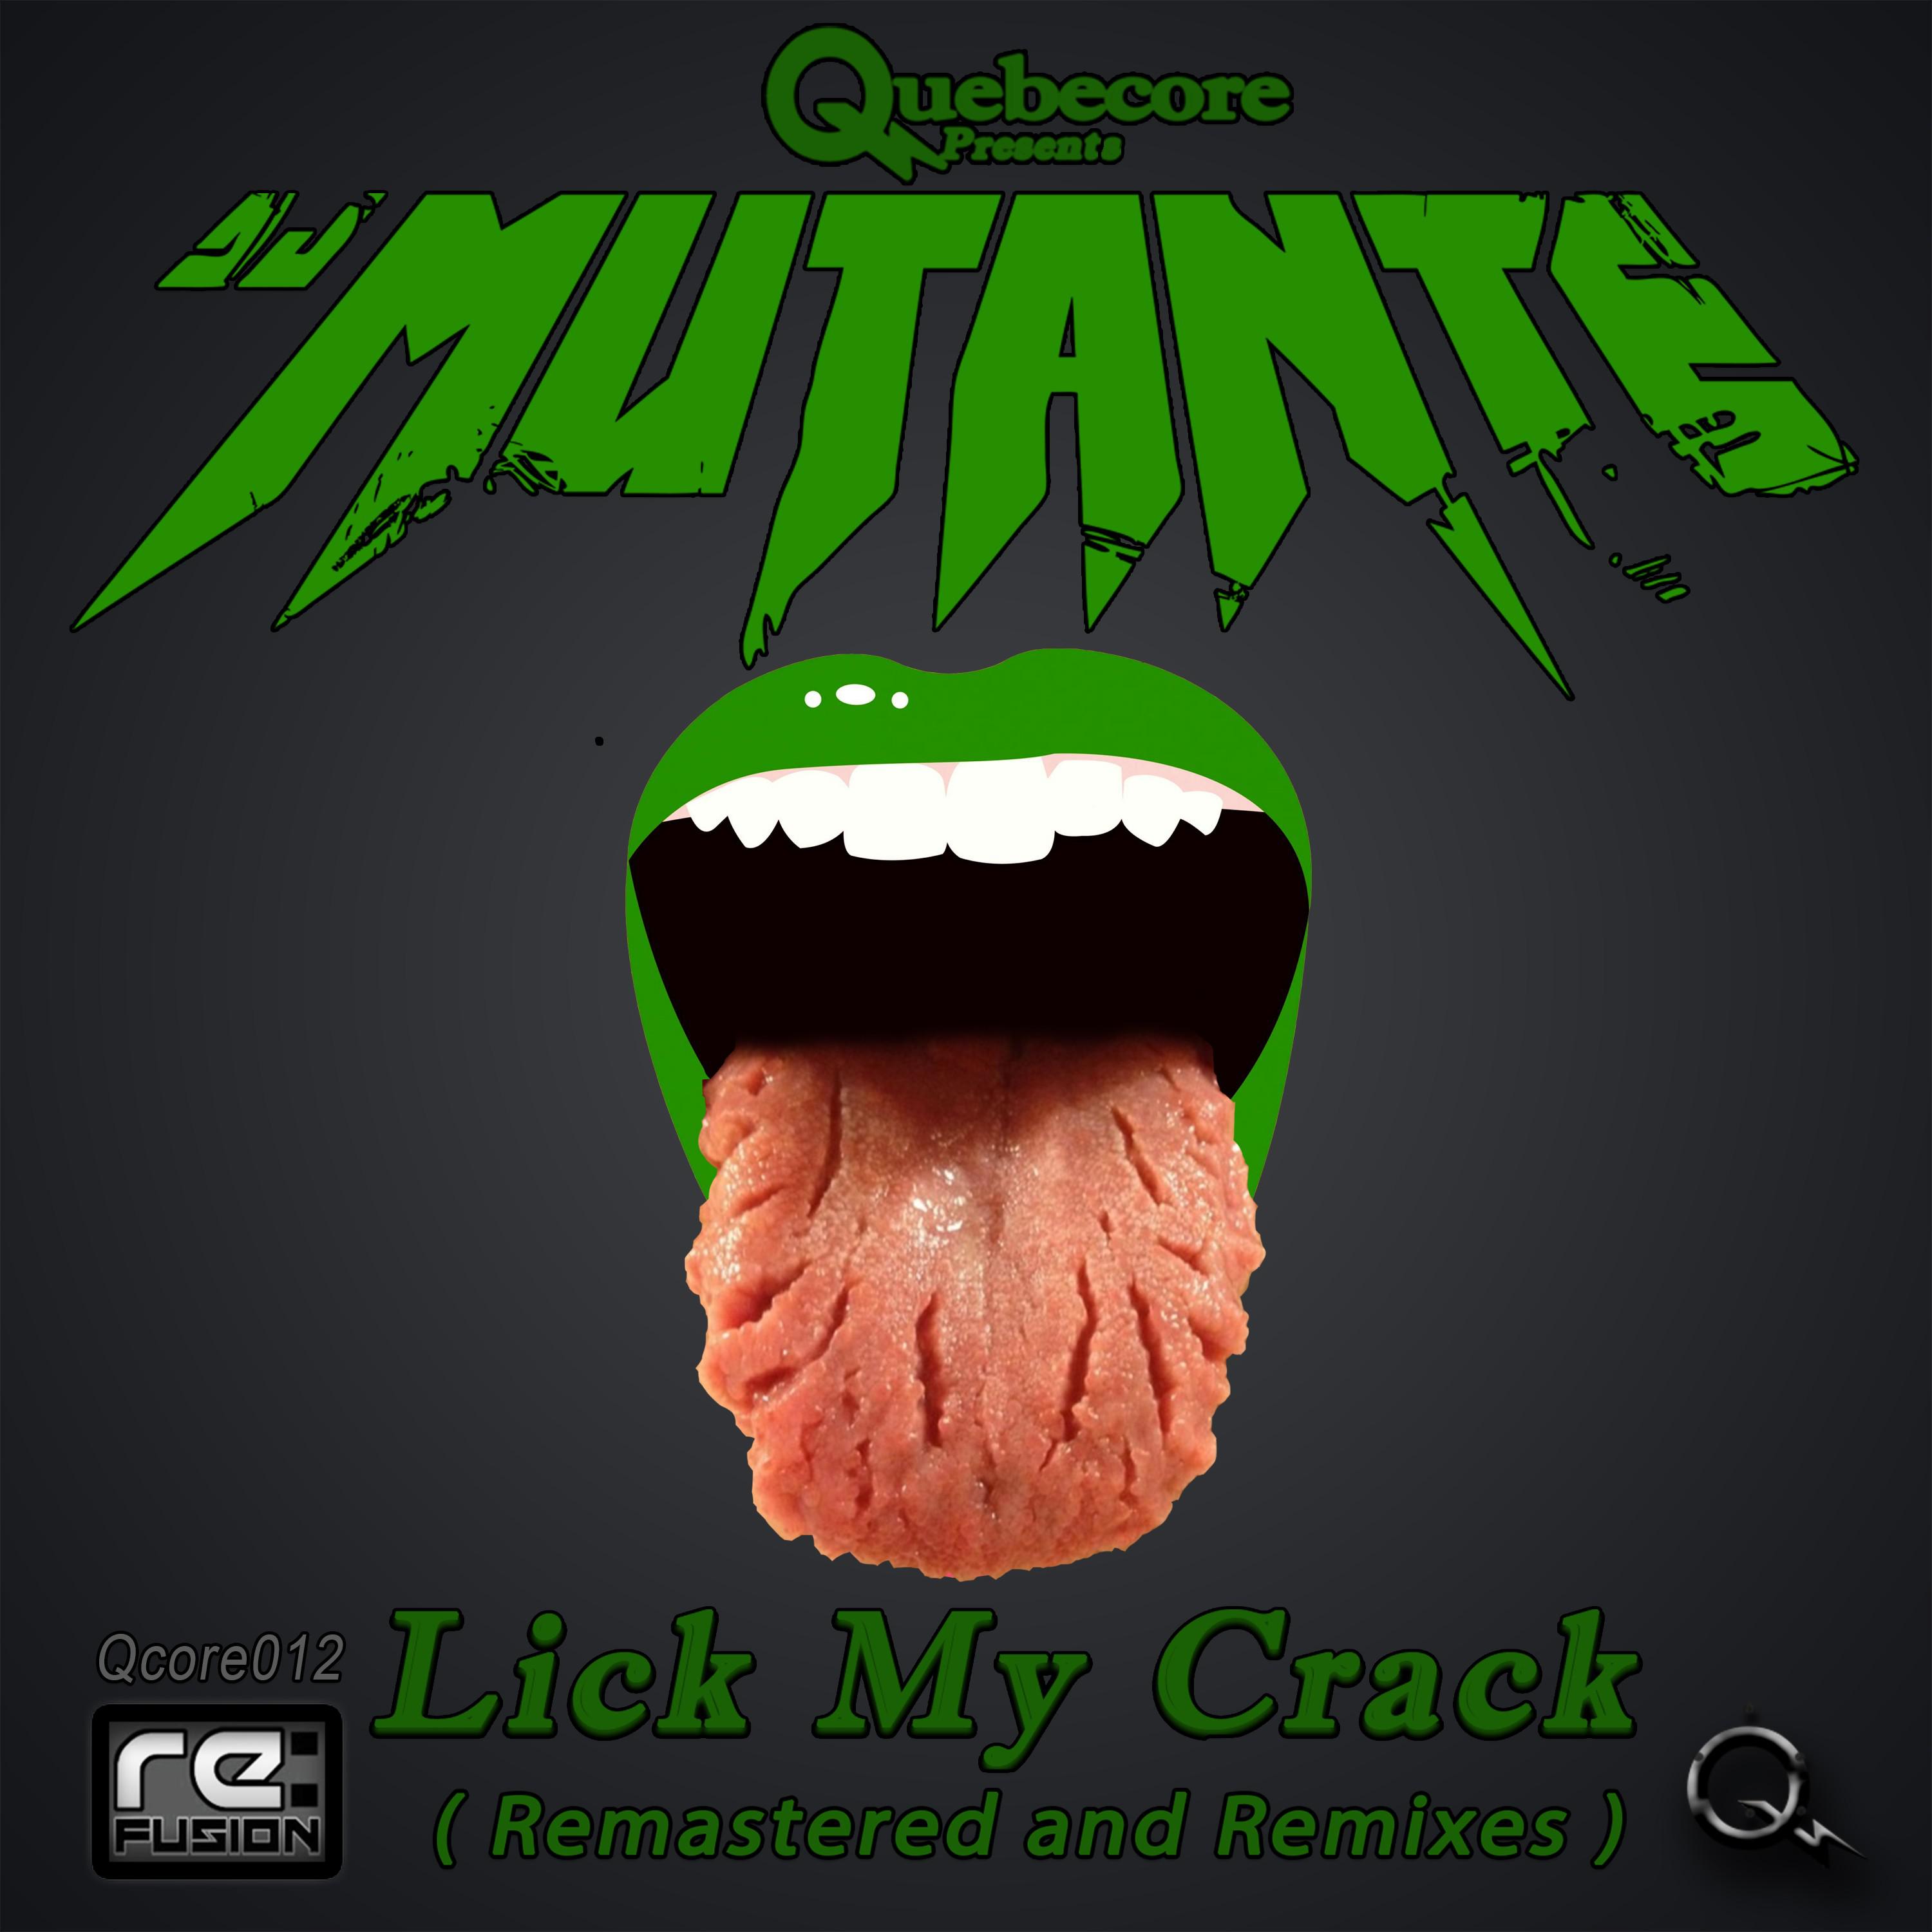 DJ Mutante - Lick My Crack (Jazz Remix Remastered)